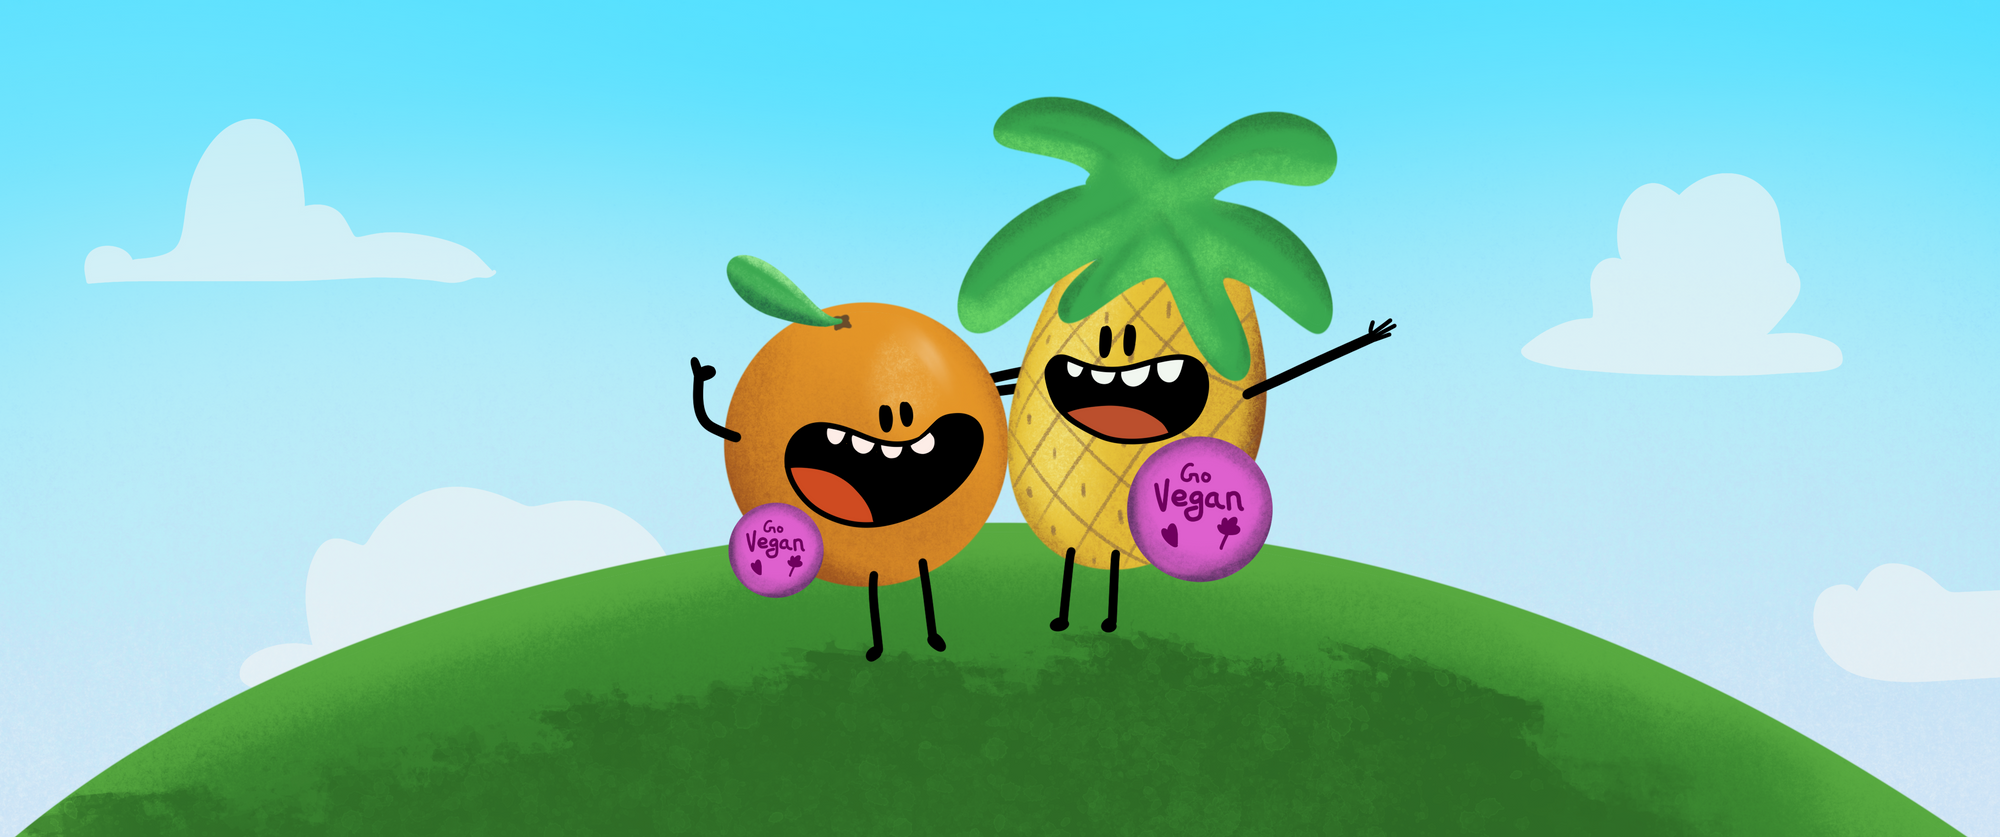 Fruits mascots standing in an open land wearing a "Go vegan" badge 